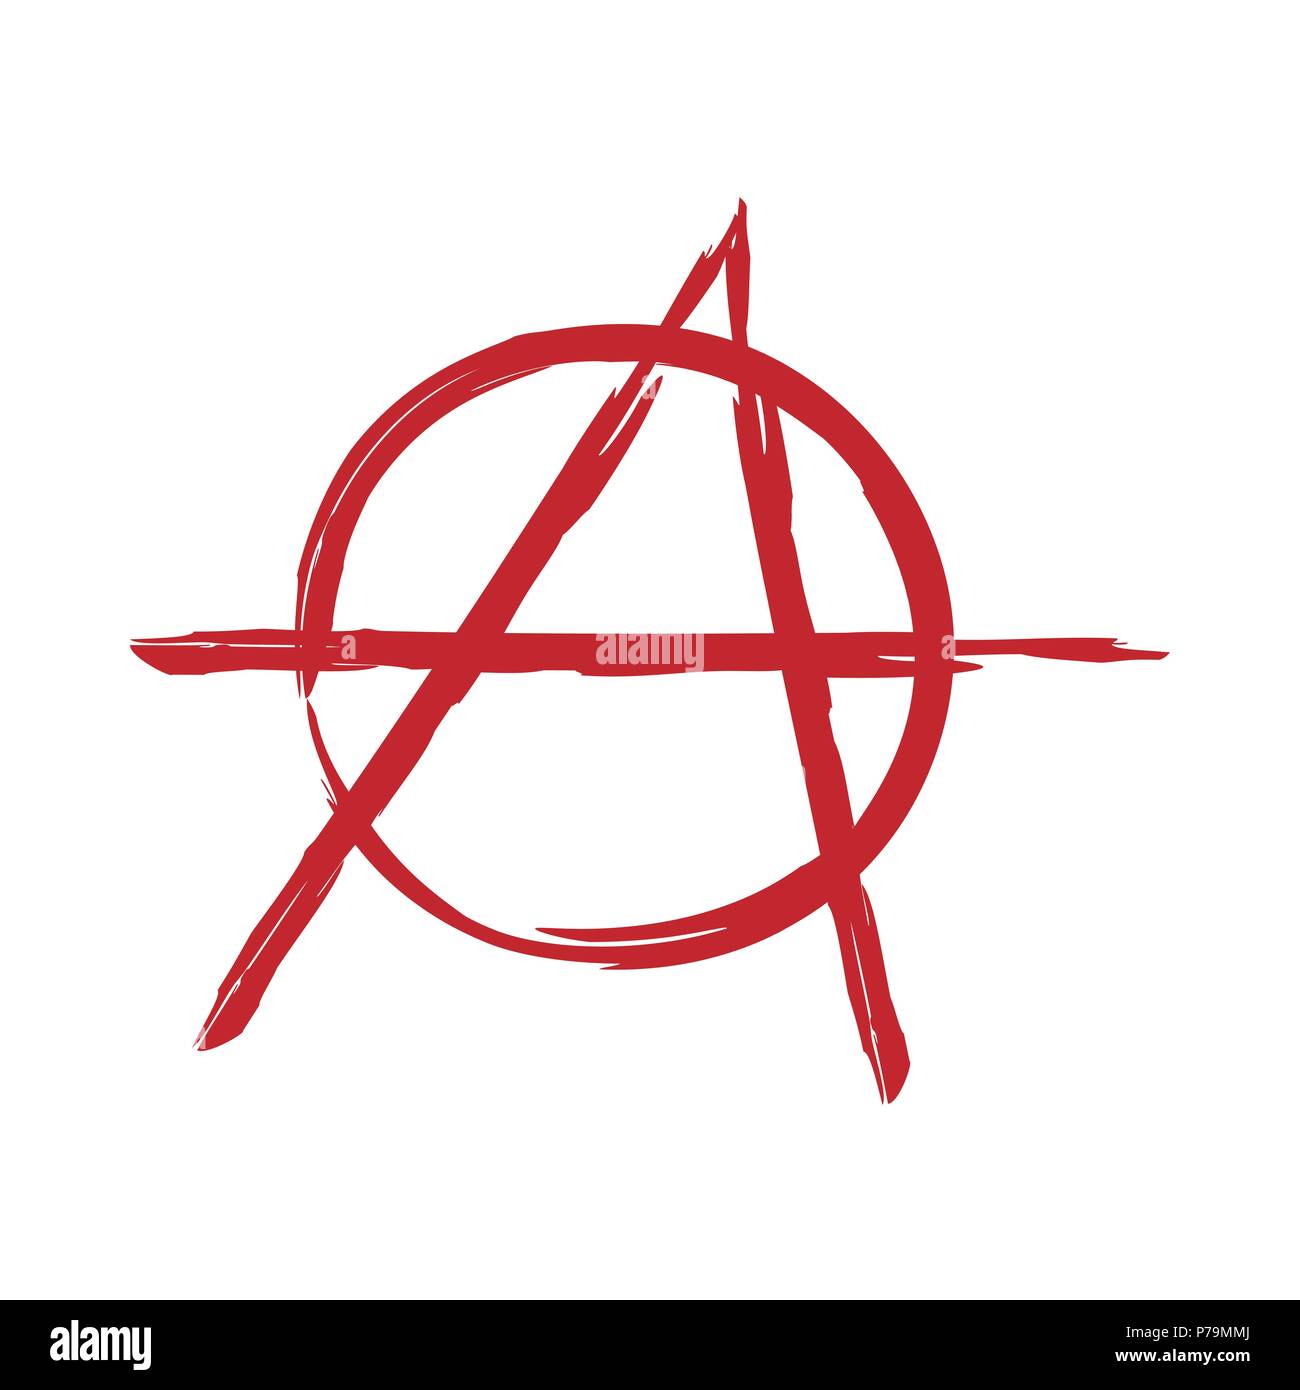 Update 84+ anarchist symbol tattoo latest - thtantai2